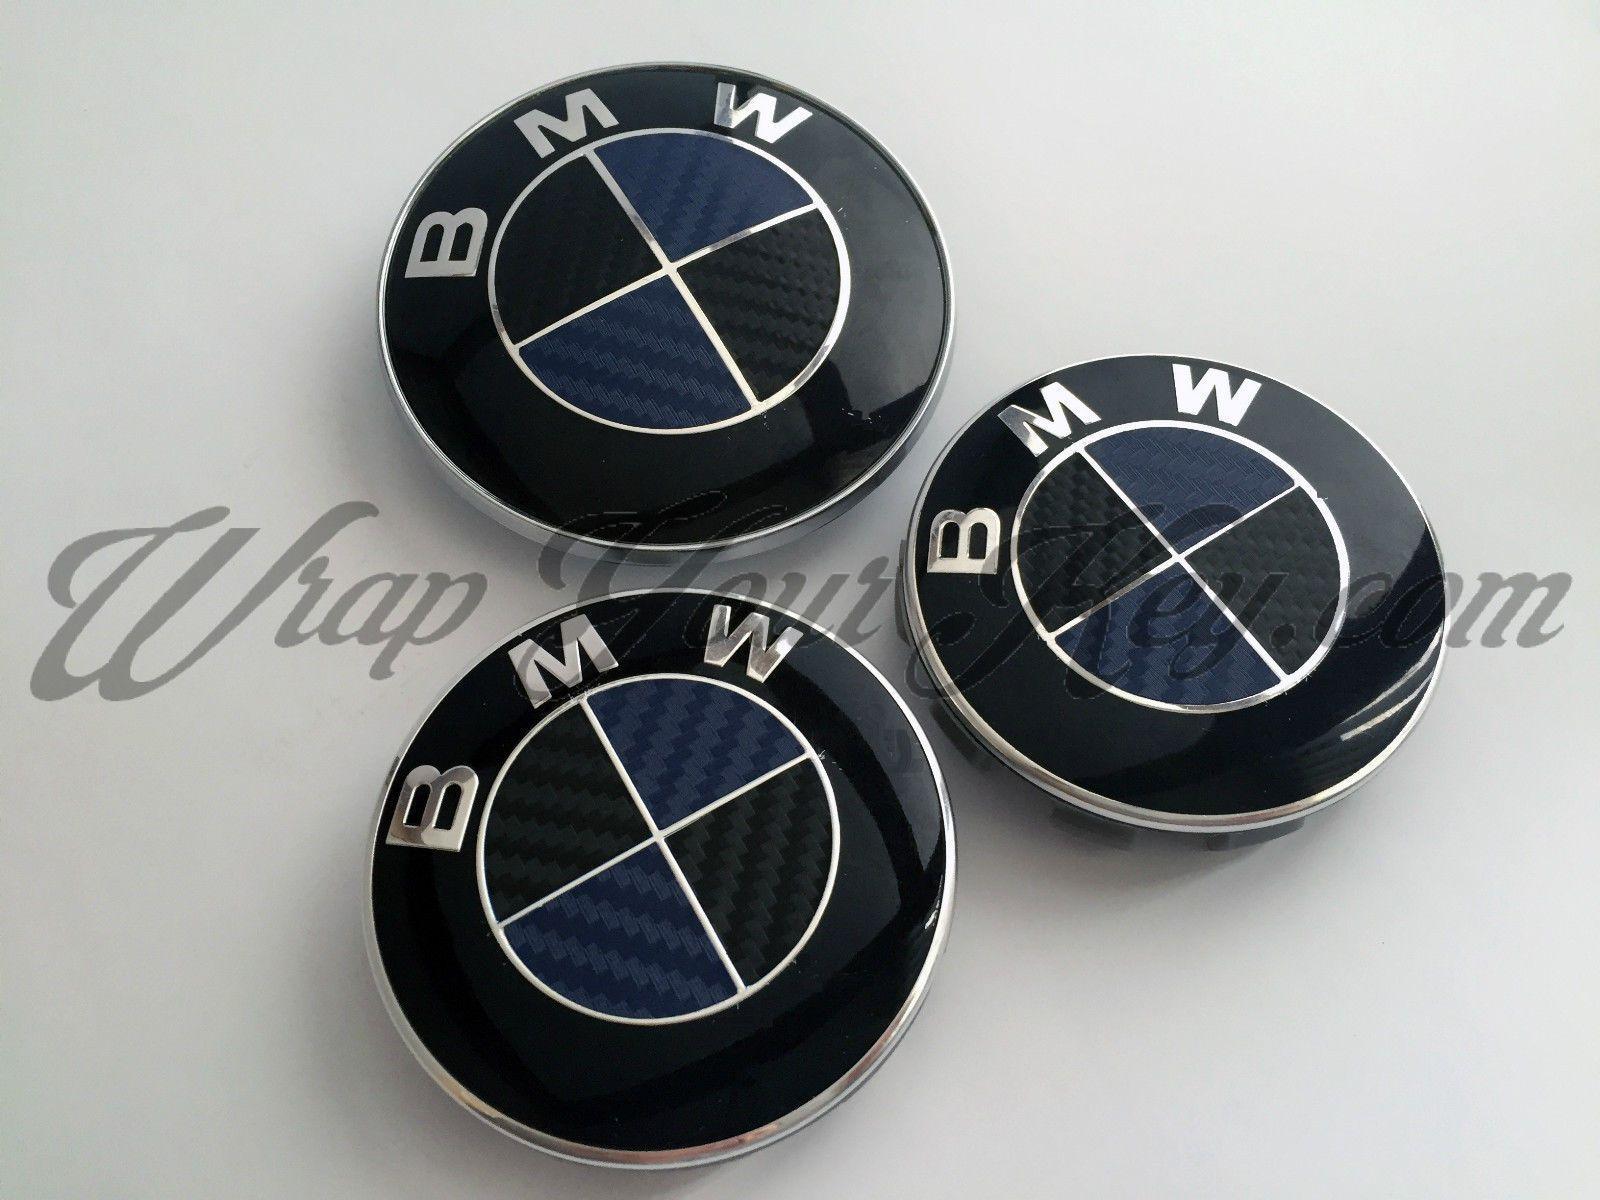 Dark Blue and Black Logo - BLACK & DARK BLUE CARBON BMW Badge Emblem Overlay HOOD TRUNK RIMS ...